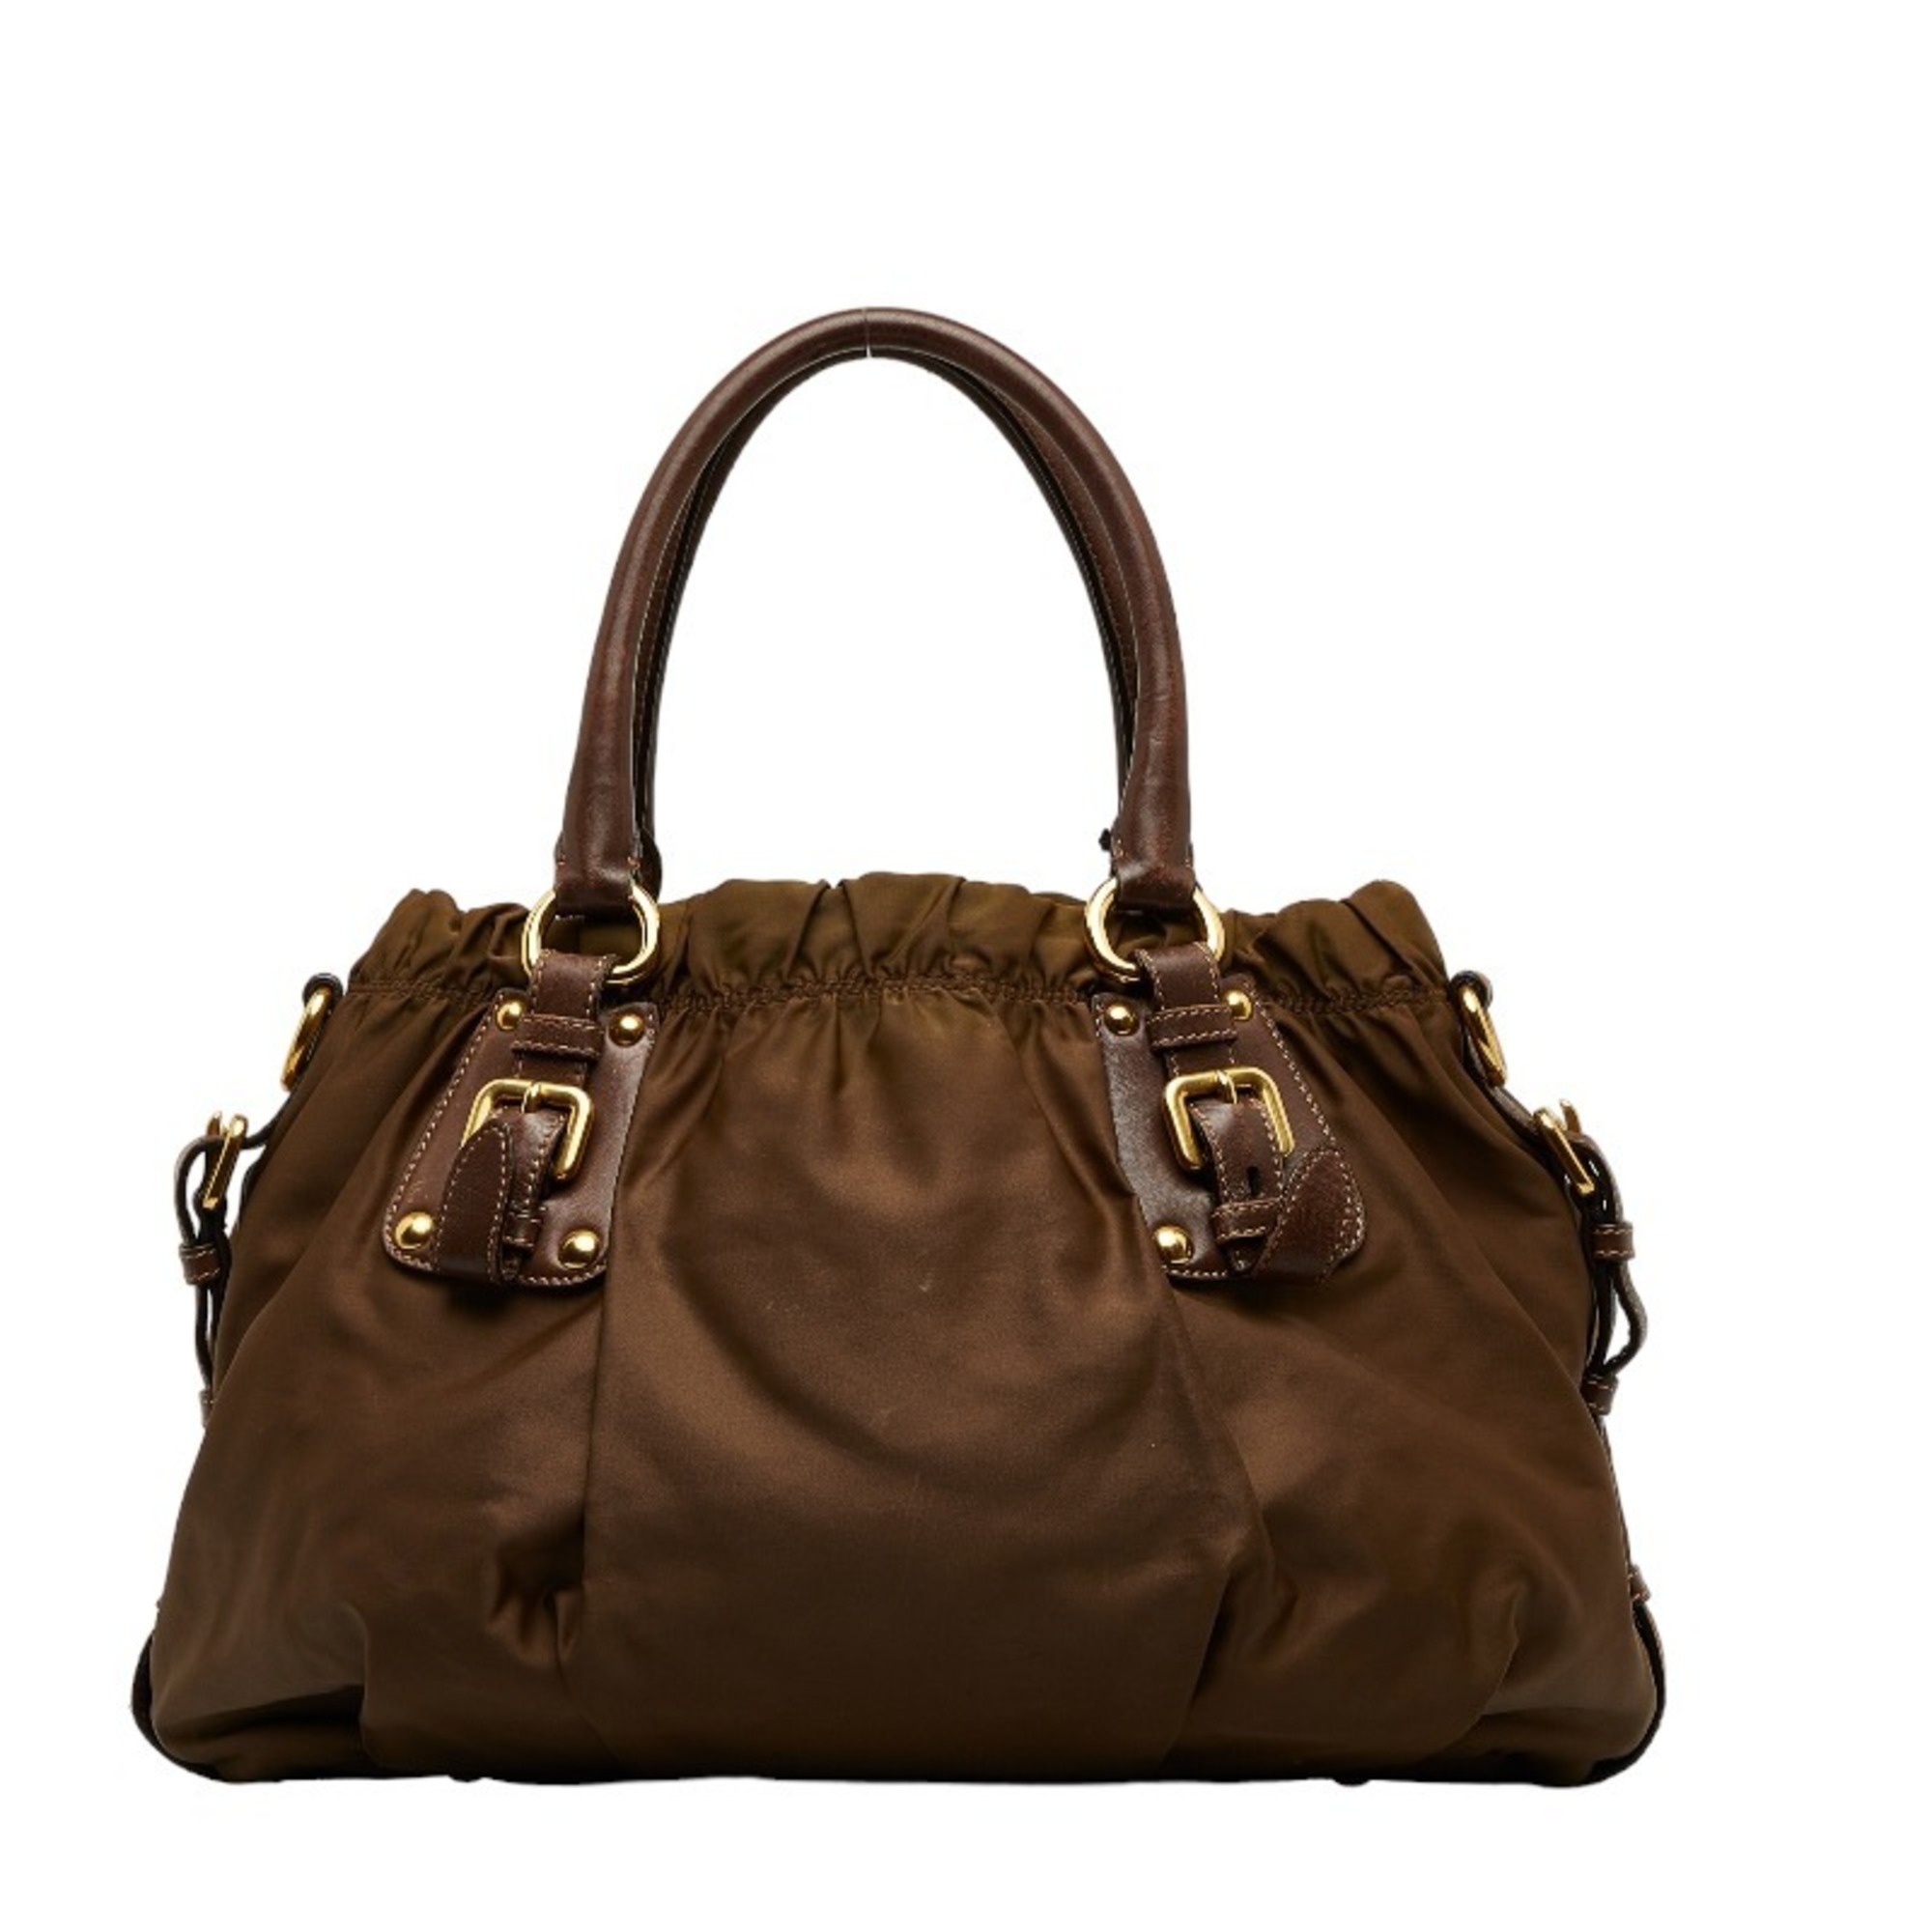 Prada Jacquard Handbag Shoulder Bag Brown Nylon Leather Women's PRADA